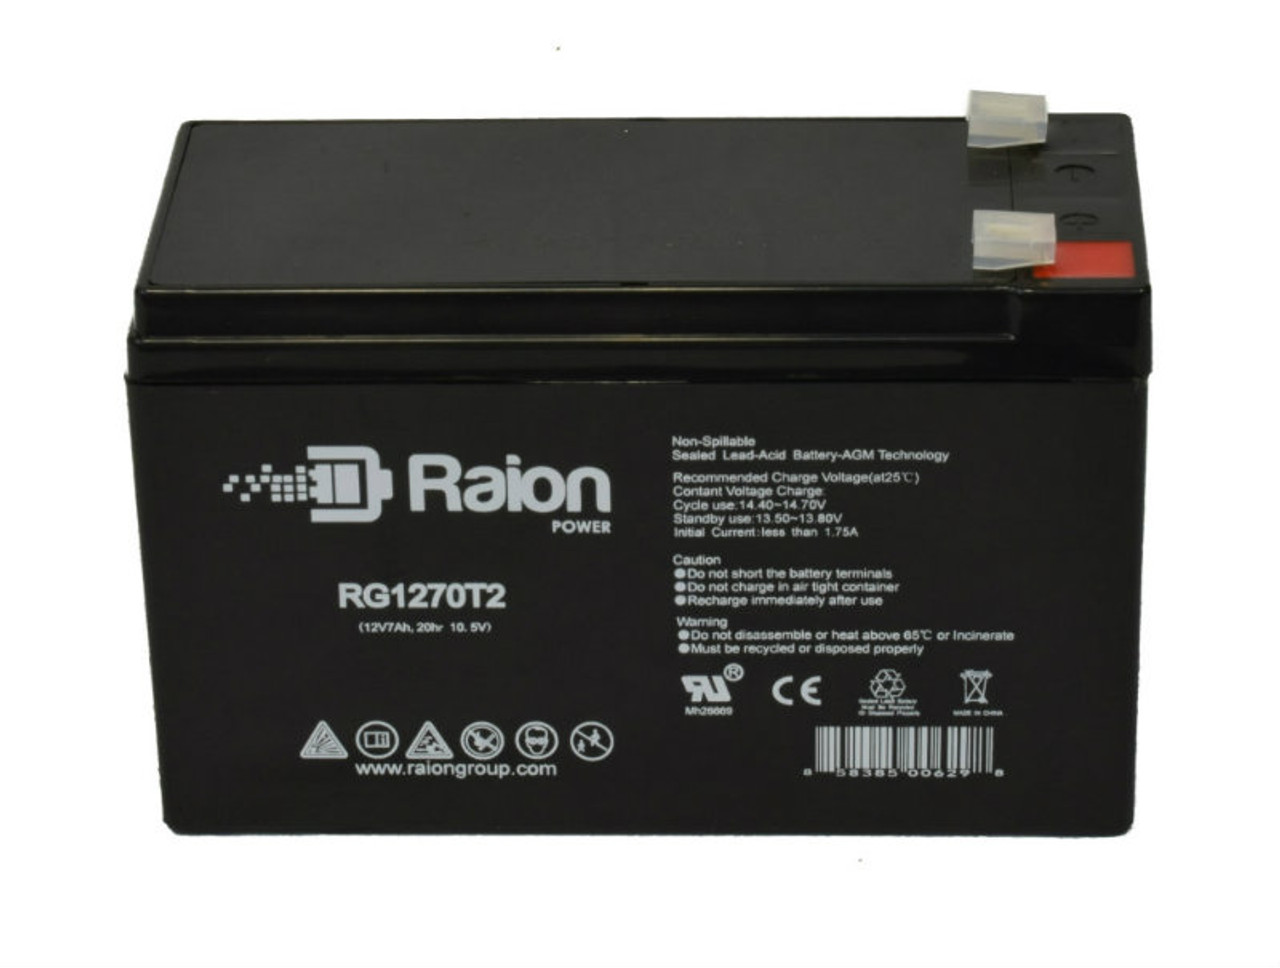 Raion Power RG1270T2 12V 7Ah Lead Acid Battery for Western 6-FM-7.5